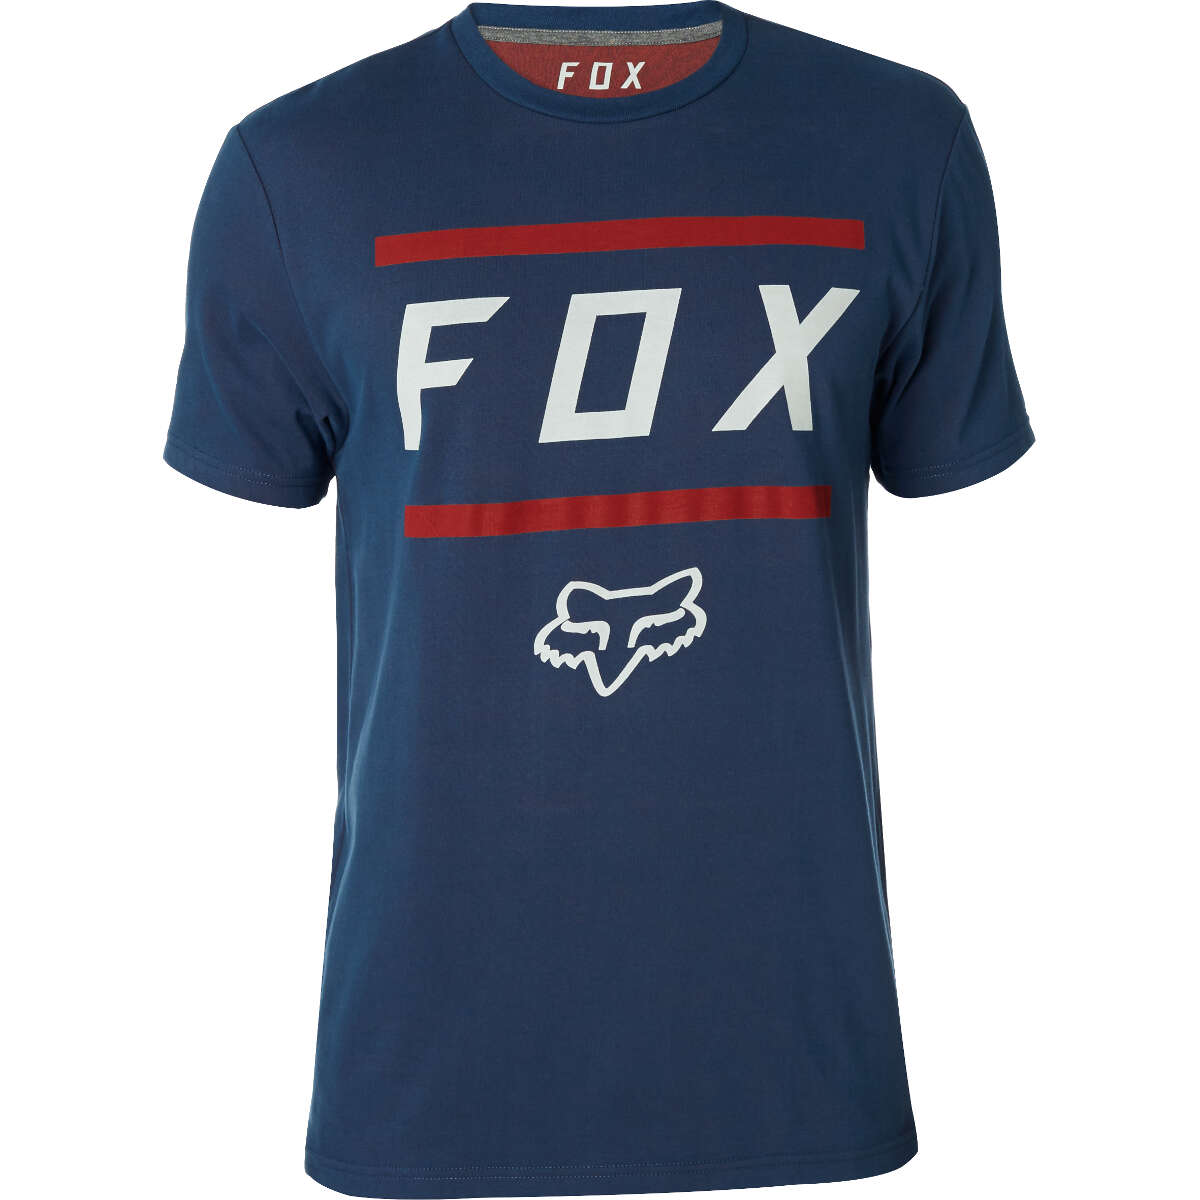 Fox T-Shirt Listless Airline Navy/Red